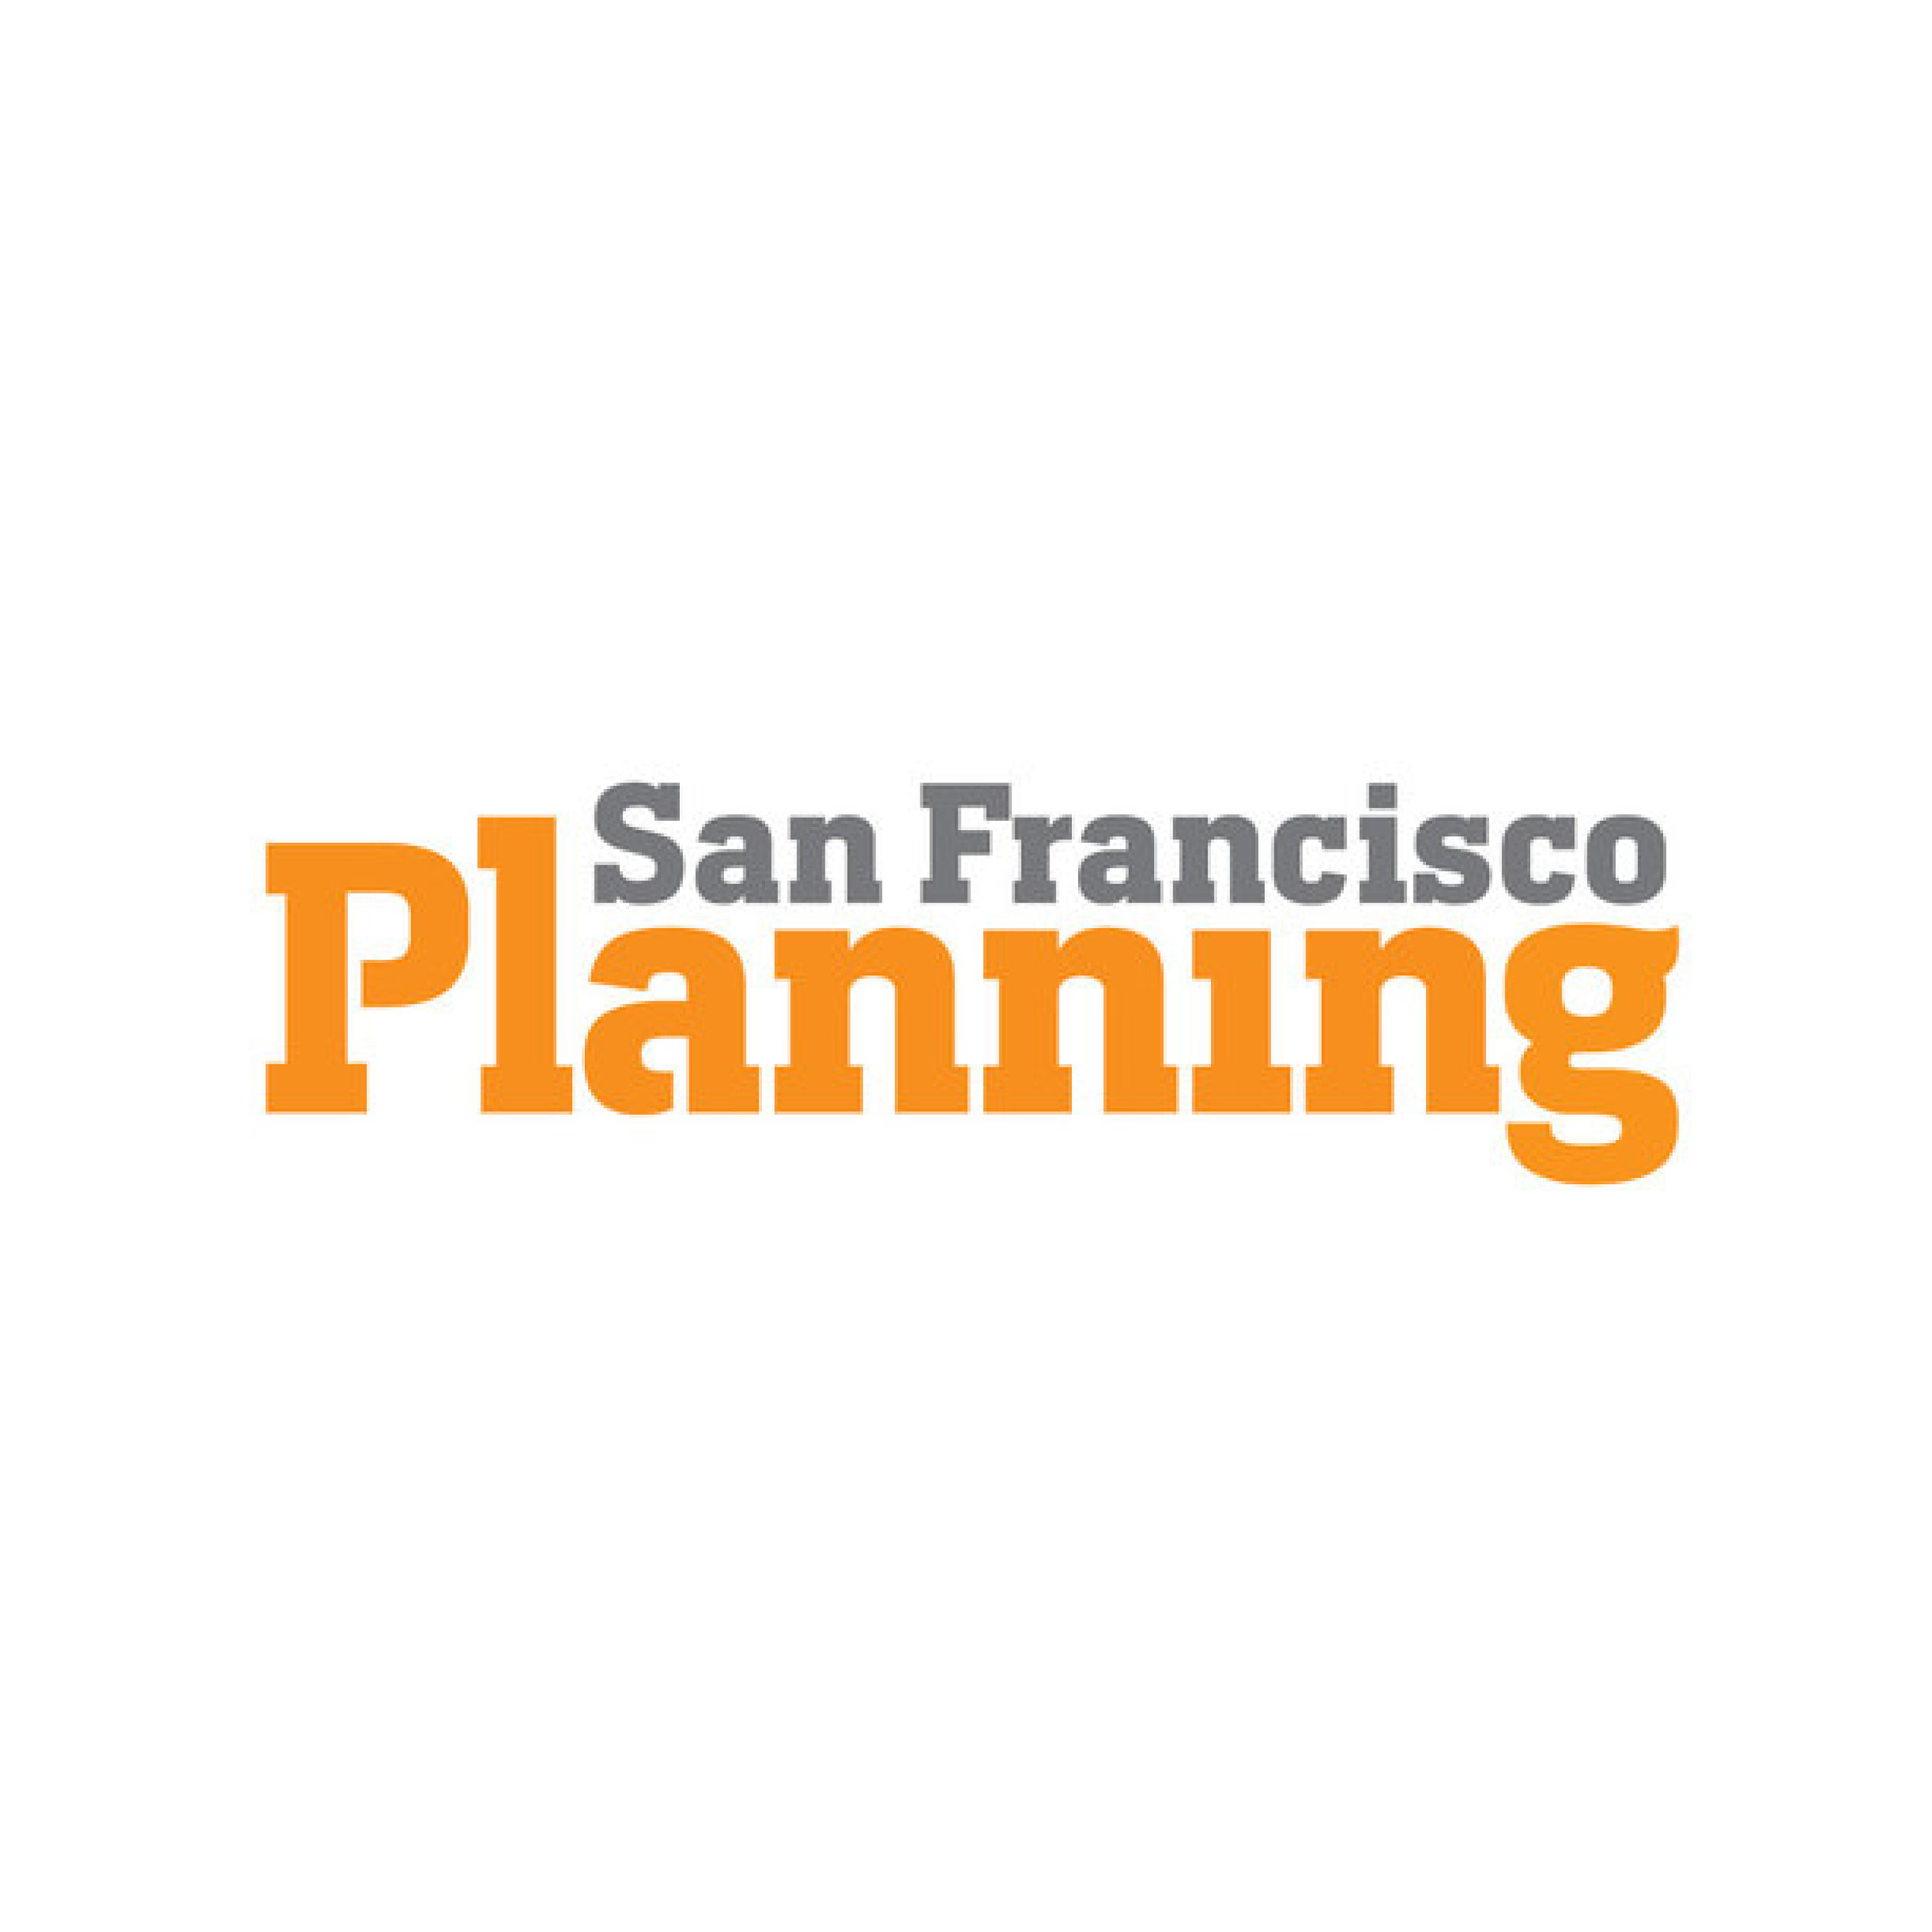 San Francisco Planning